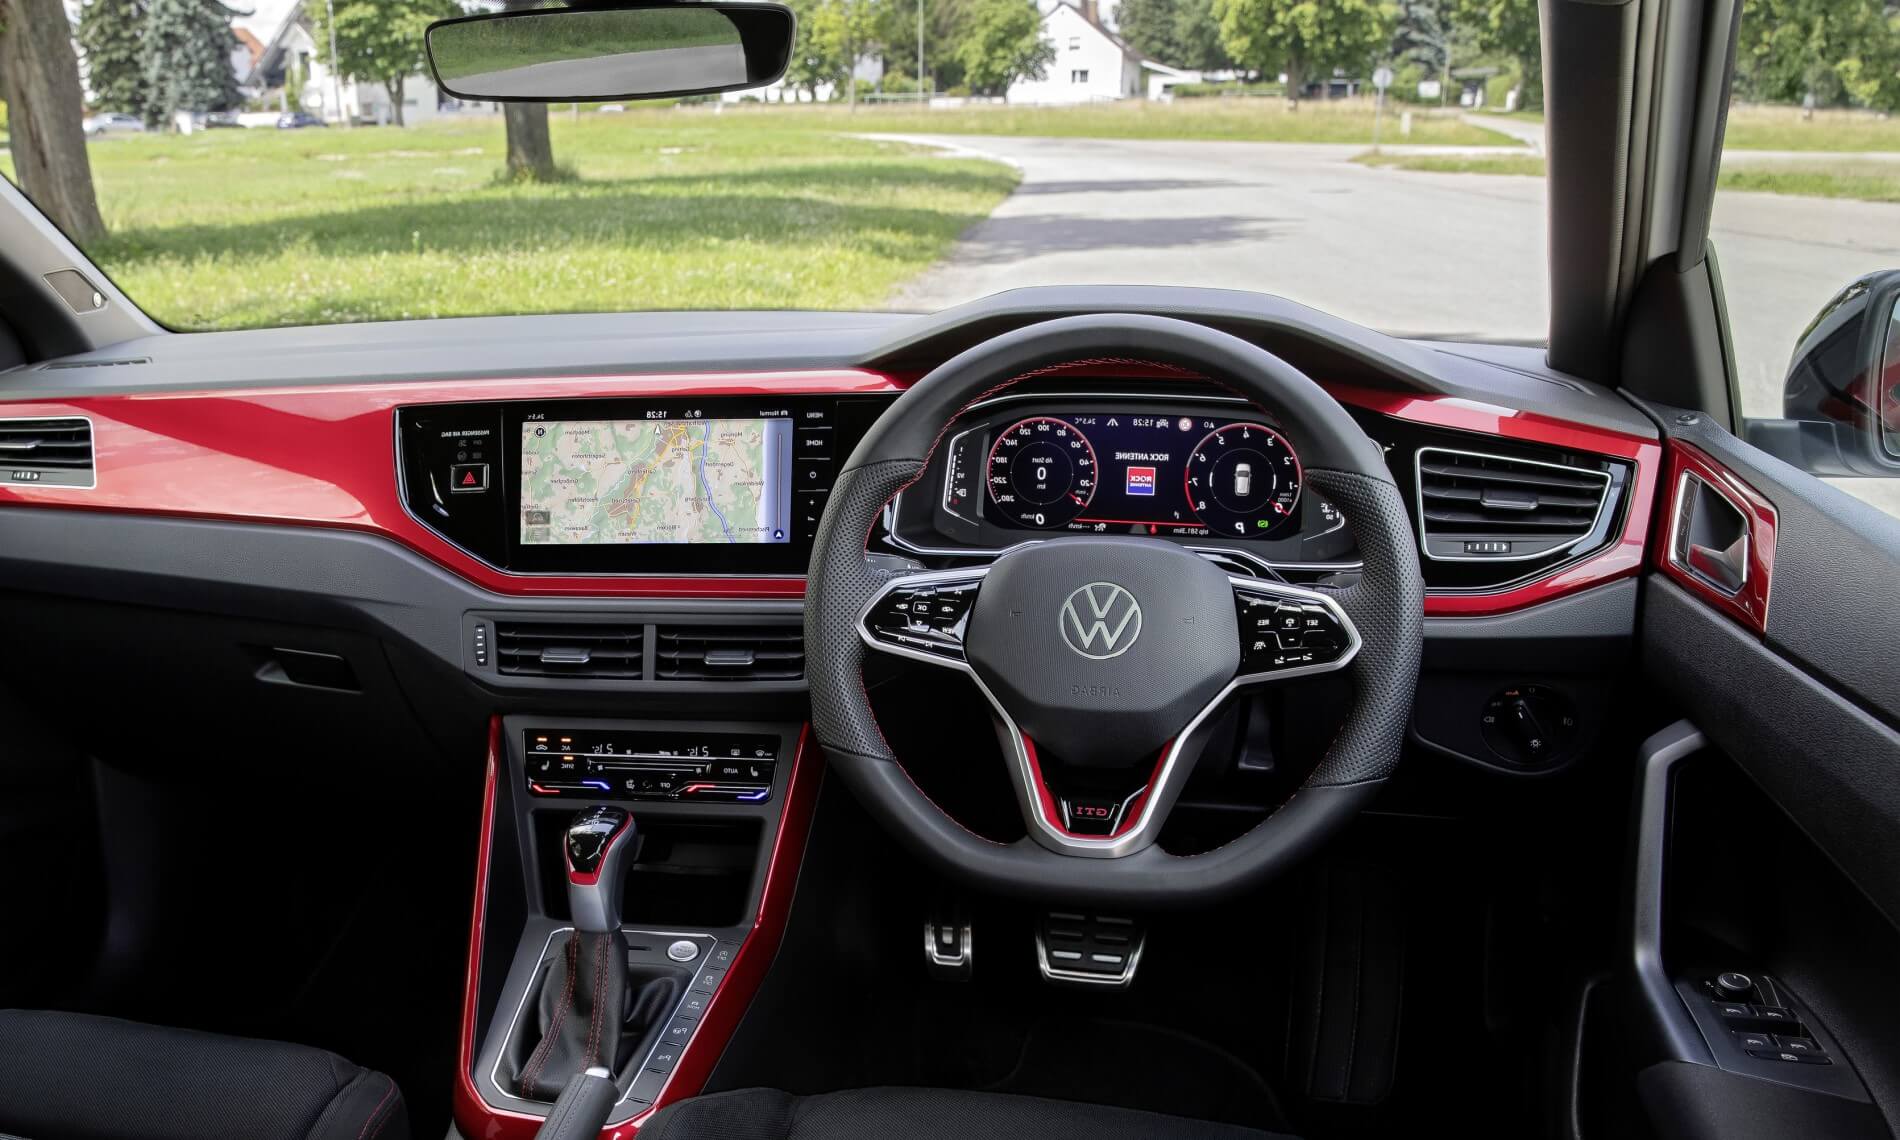 VW Polo GTI interior (1)